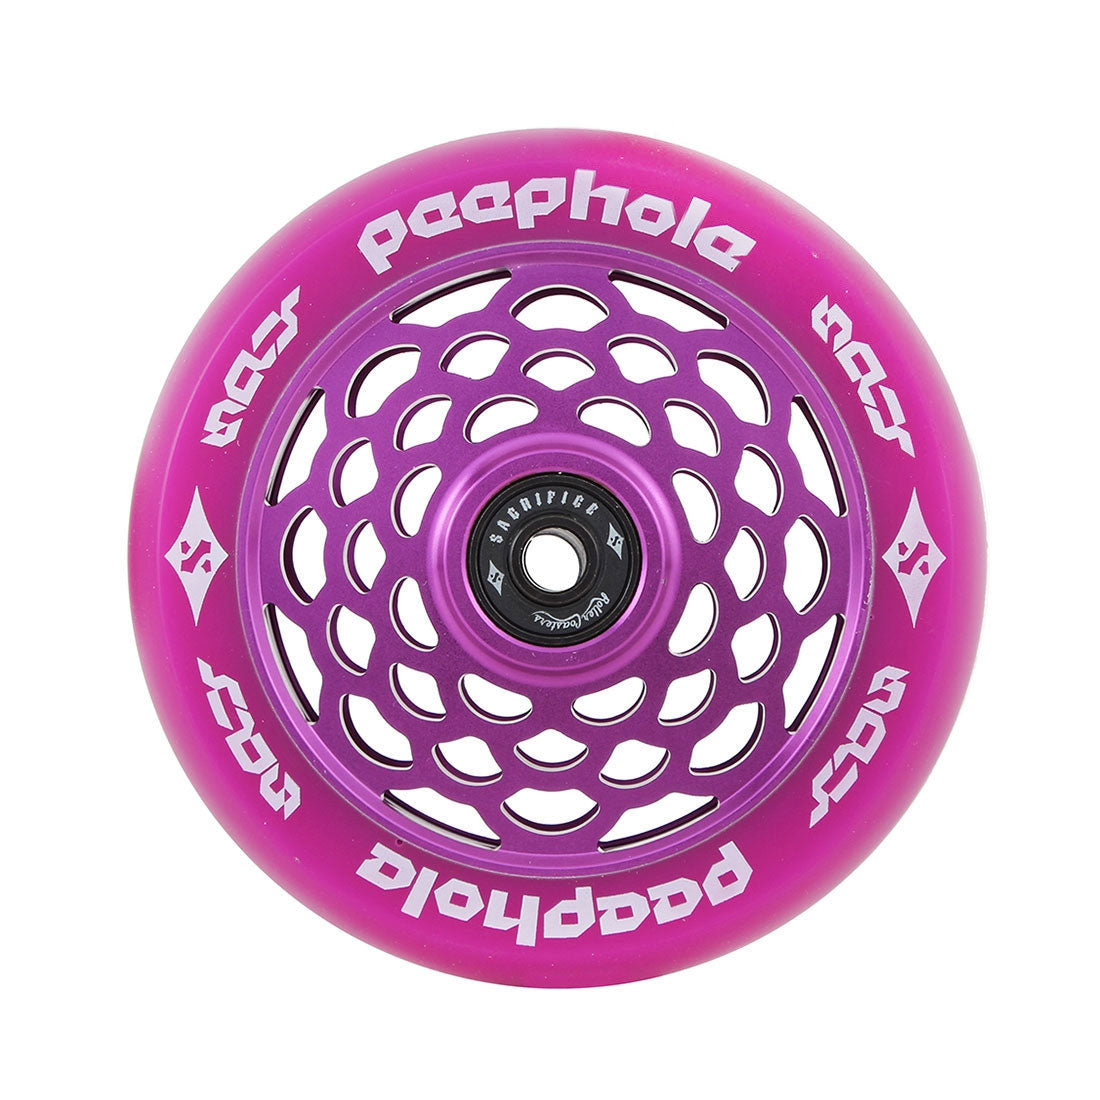 Sacrifice Spy PeepHole 110mm Wheel - All Purple Scooter Wheels